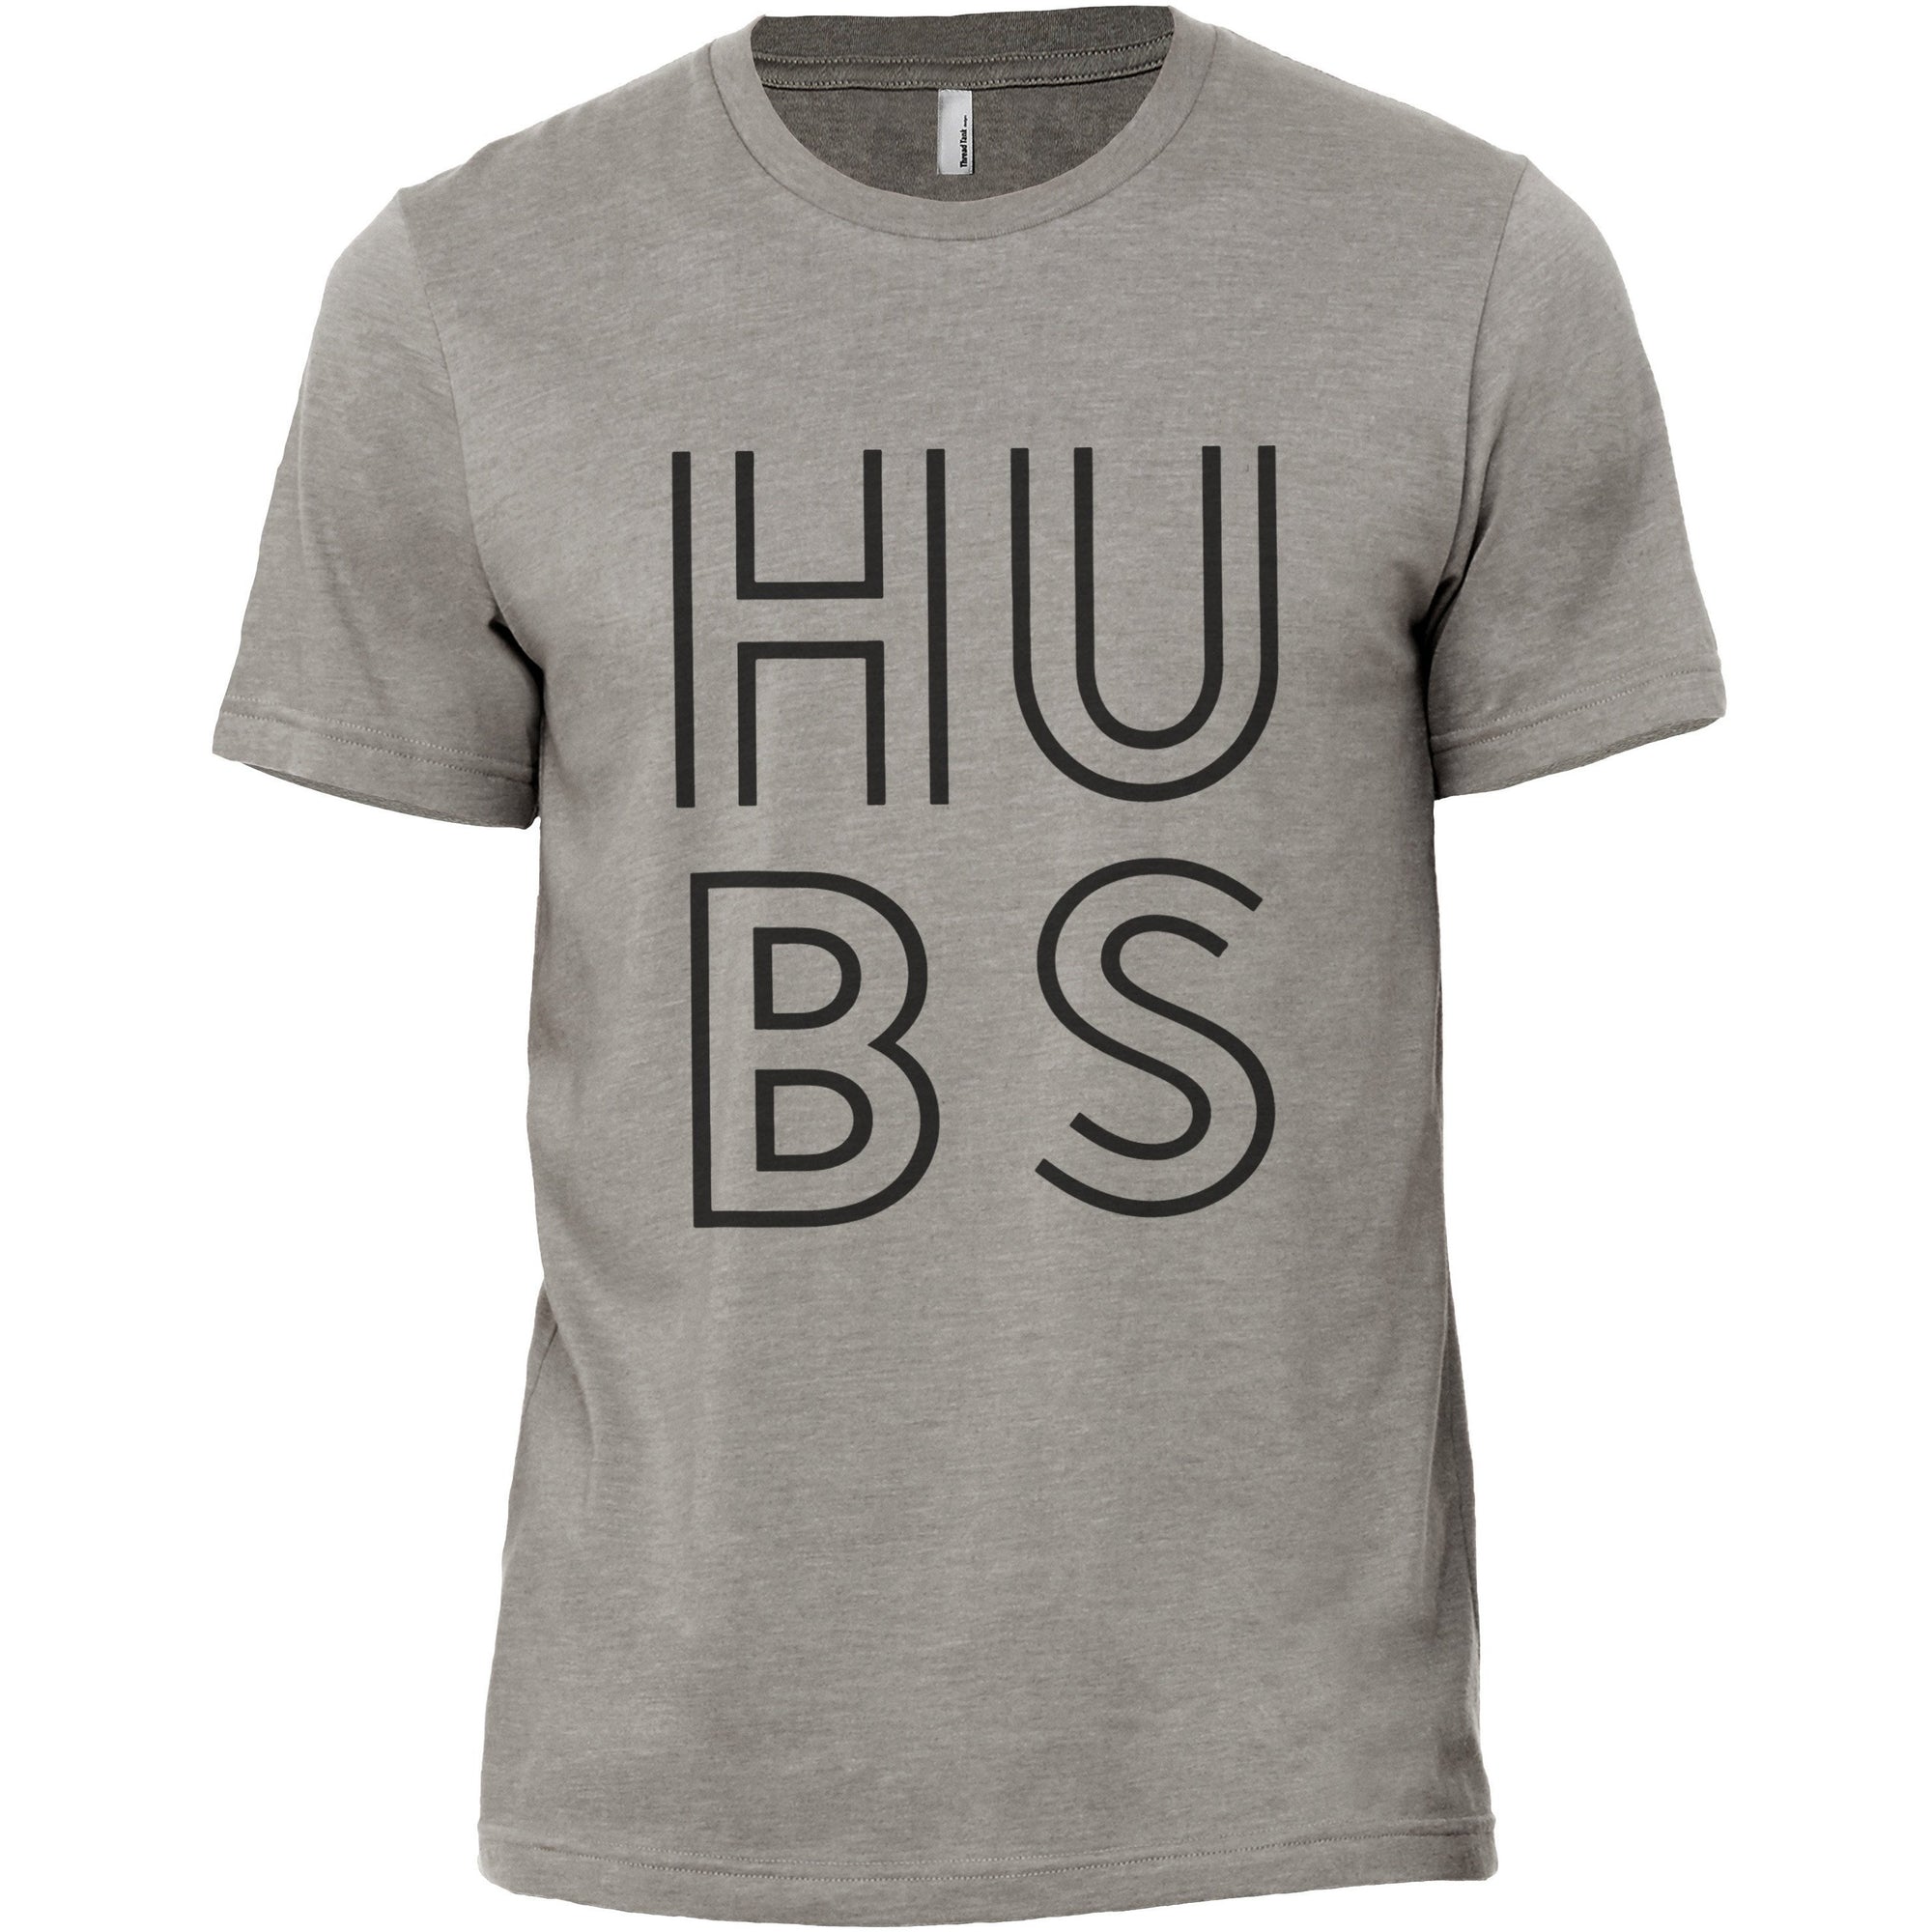 Hubs Minimalistic Design Military Grey Printed Graphic Men's Crew T-Shirt Tee